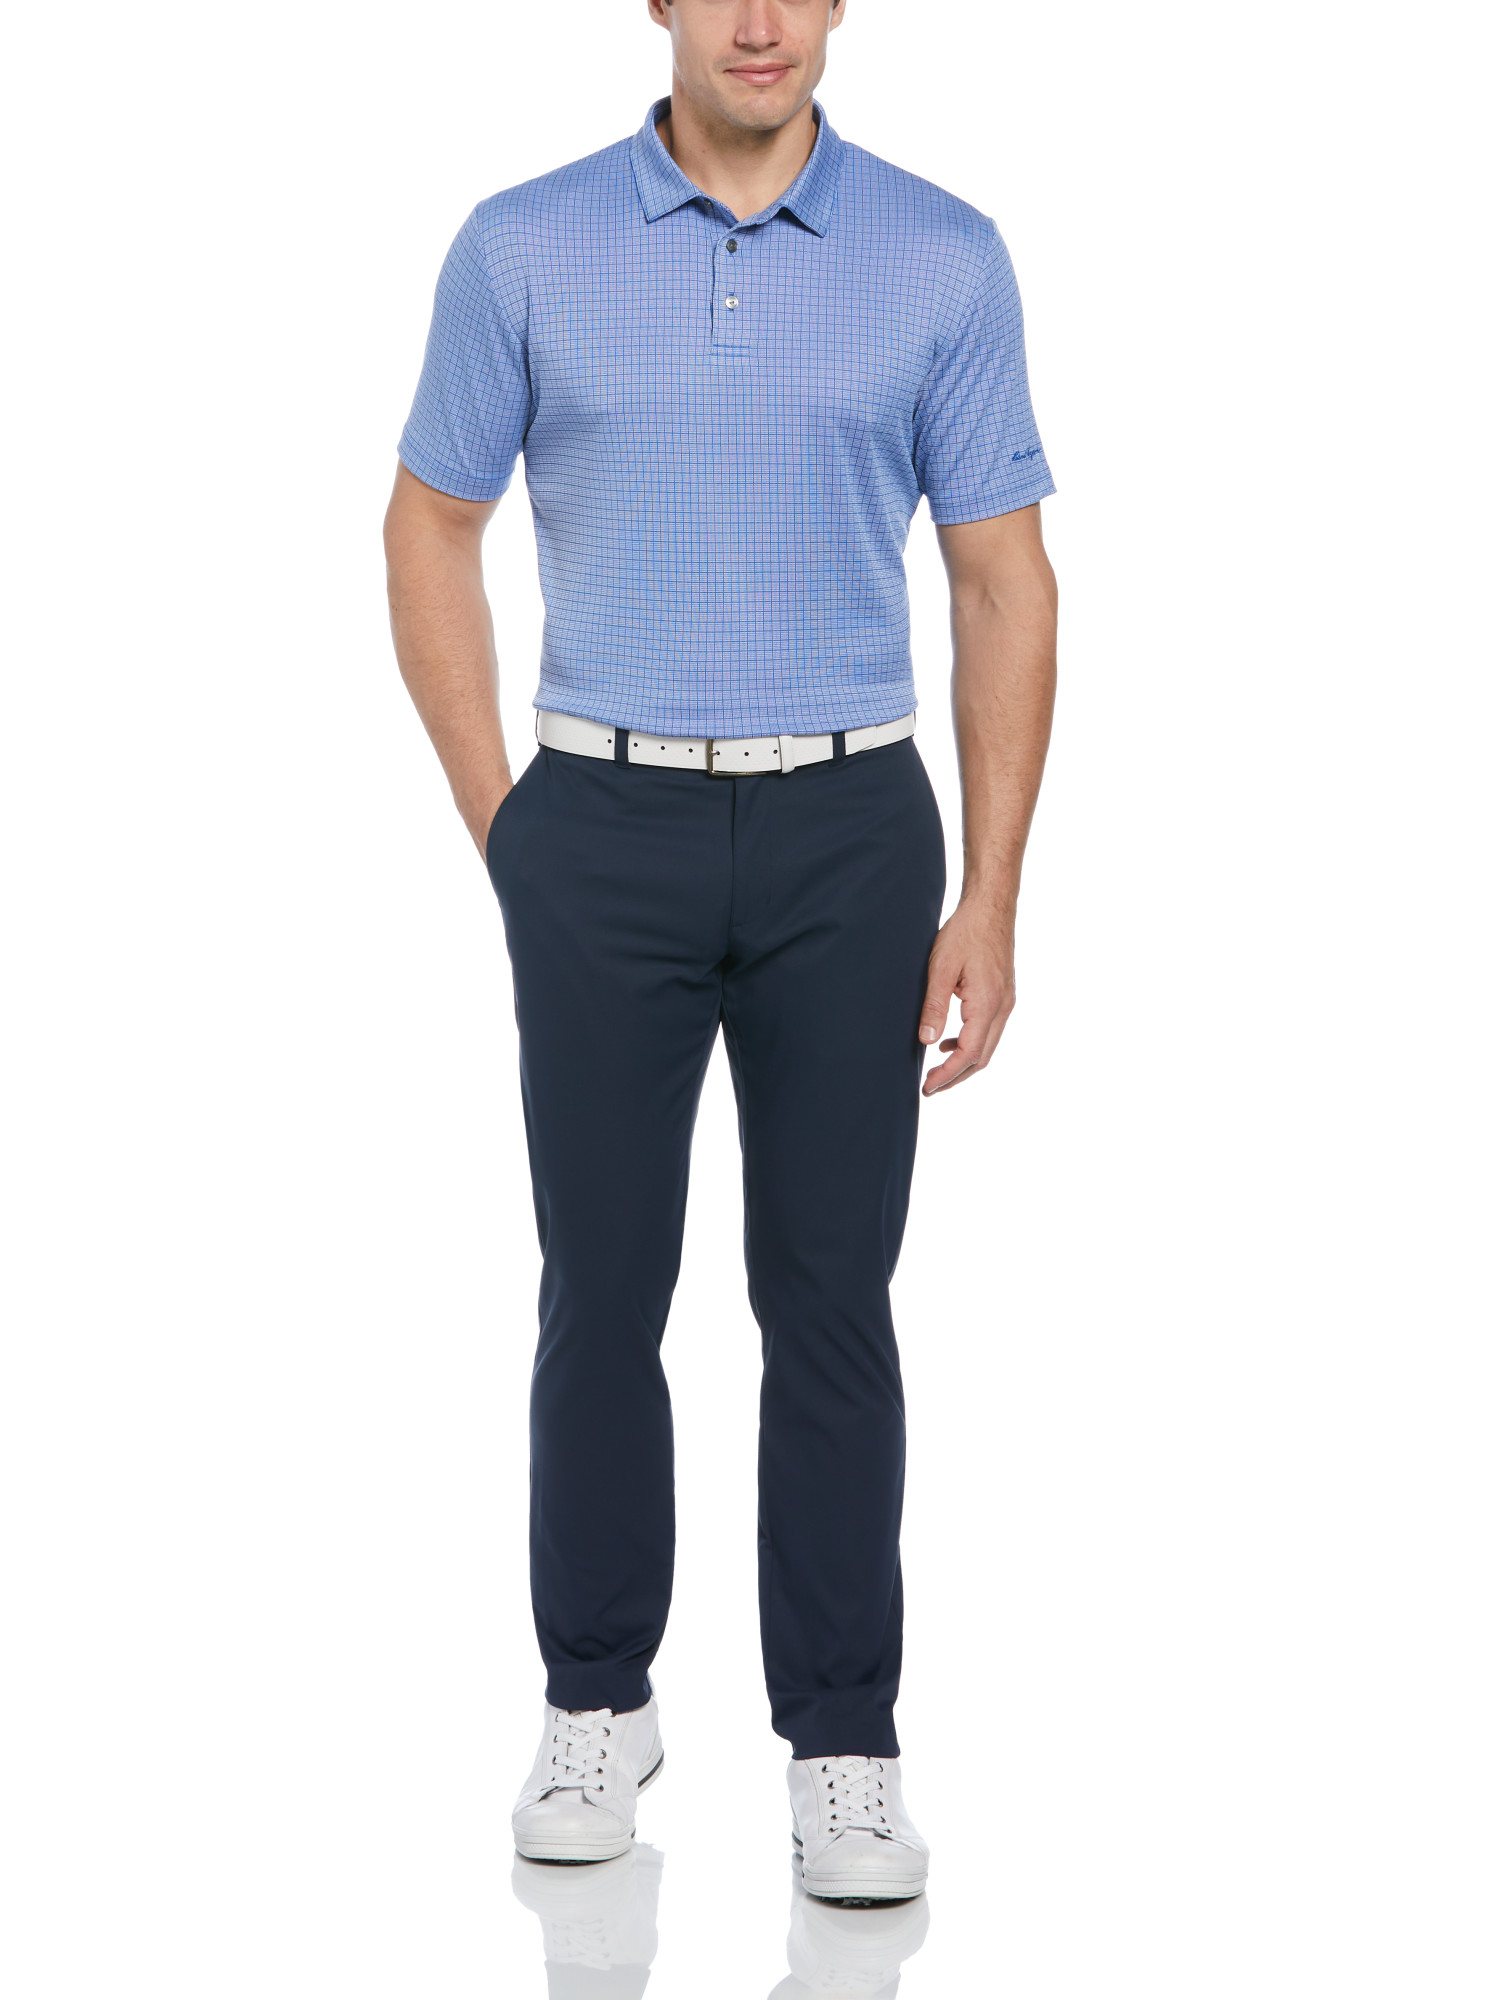 Ben Hogan Men's Flex 4-Way Stretch Golf Pants with Active Waistband, Sizes 30-50 - image 3 of 4